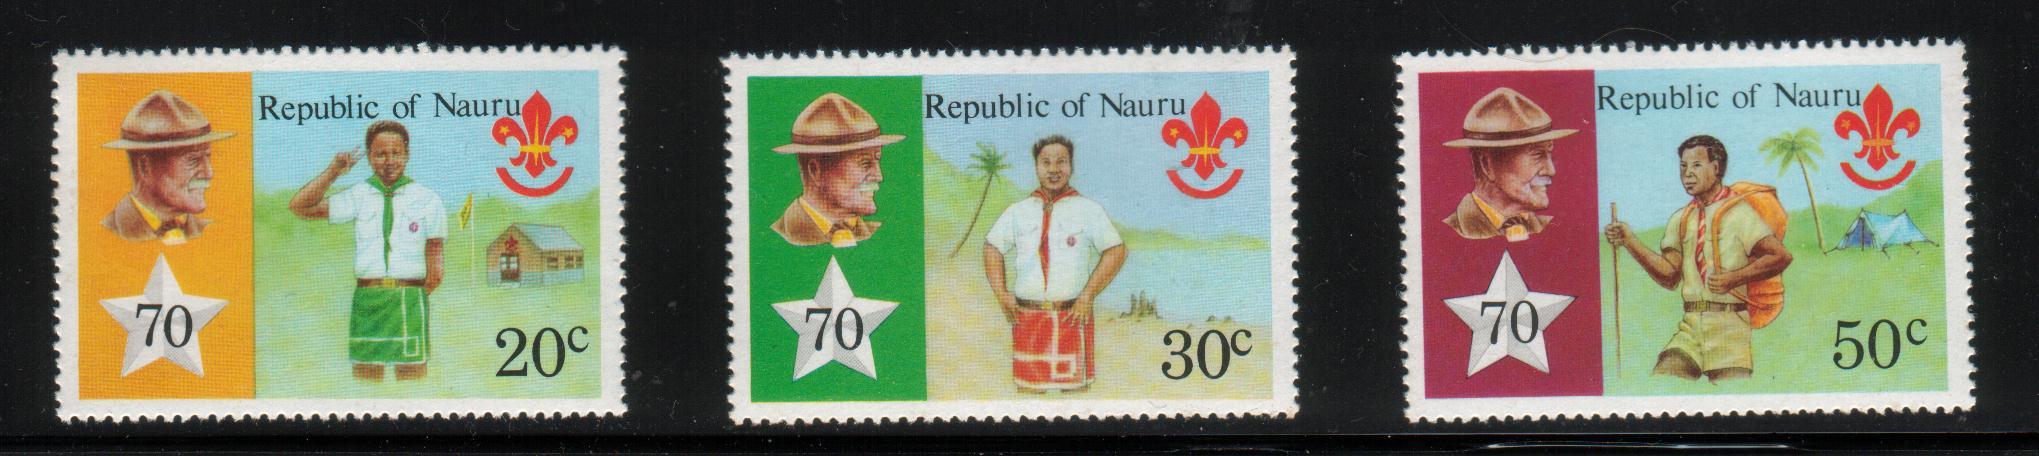 NAURU 1978 SCOUTS SET OF 3 NHM - Nauru